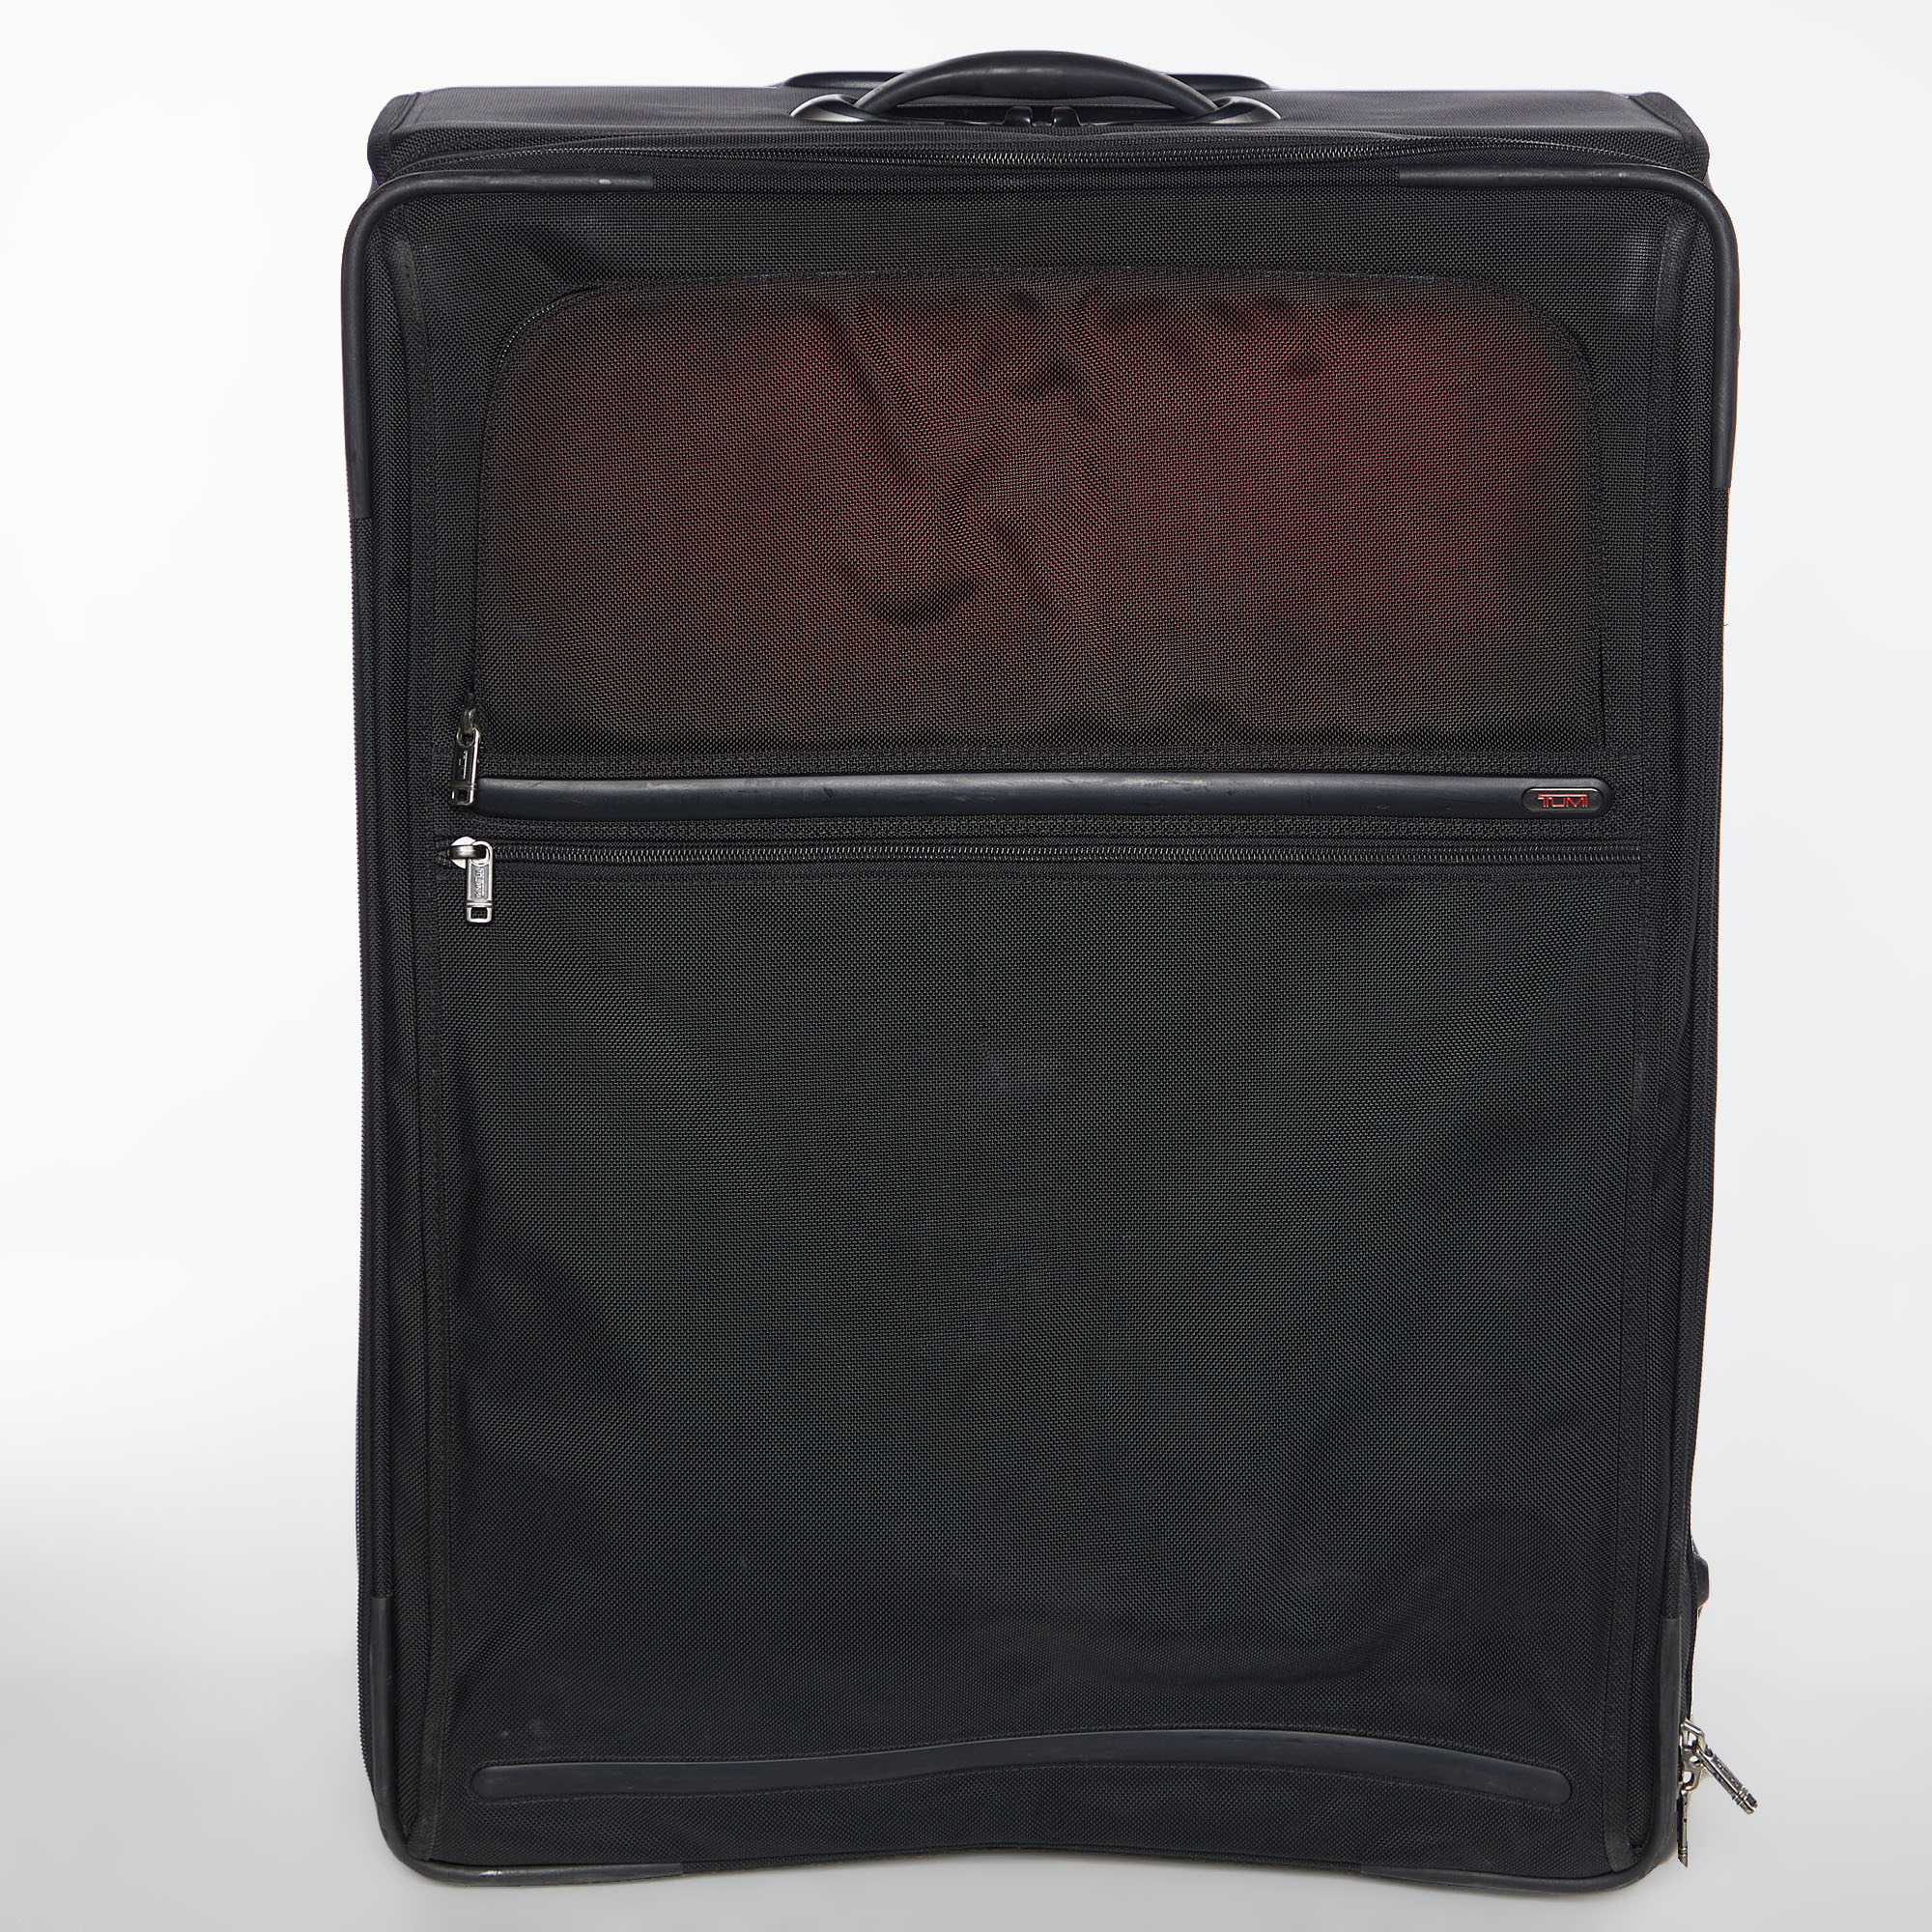 Pre-owned Tumi Black Nylon Frequent Traveler Suitcase